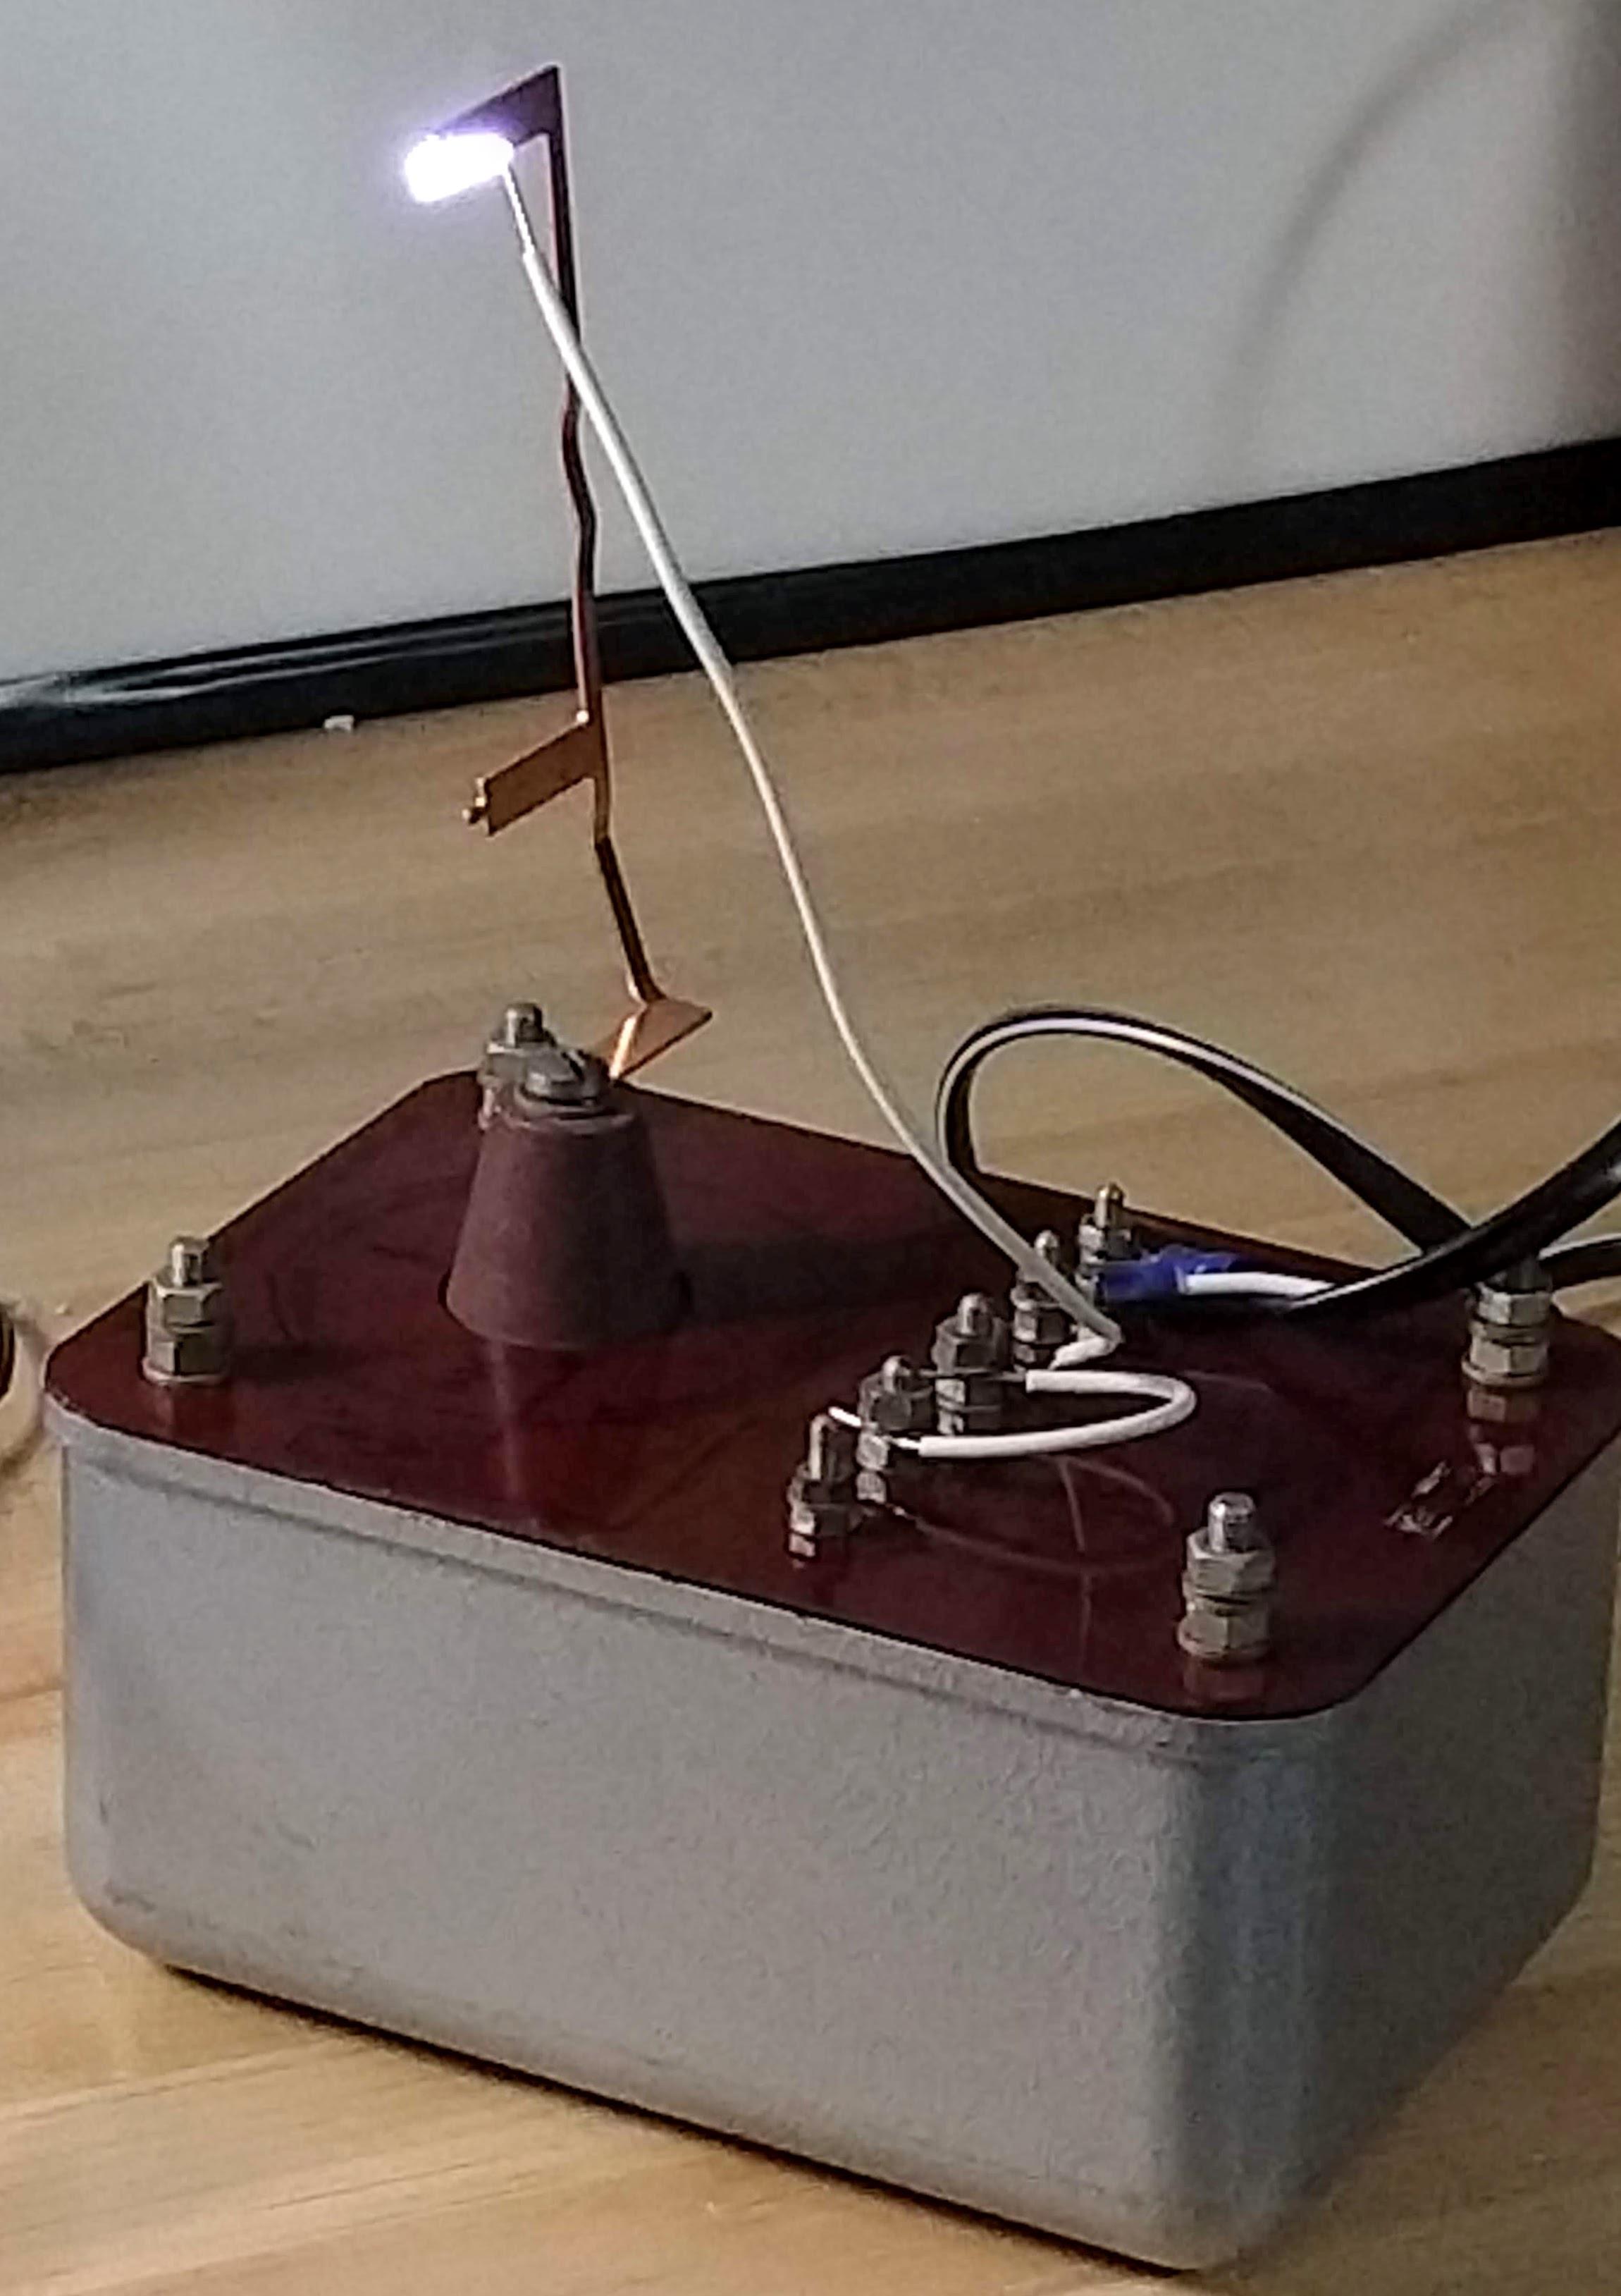 The Best DIY Tesla Coil Kit 8.0 - Eastern Voltage Research